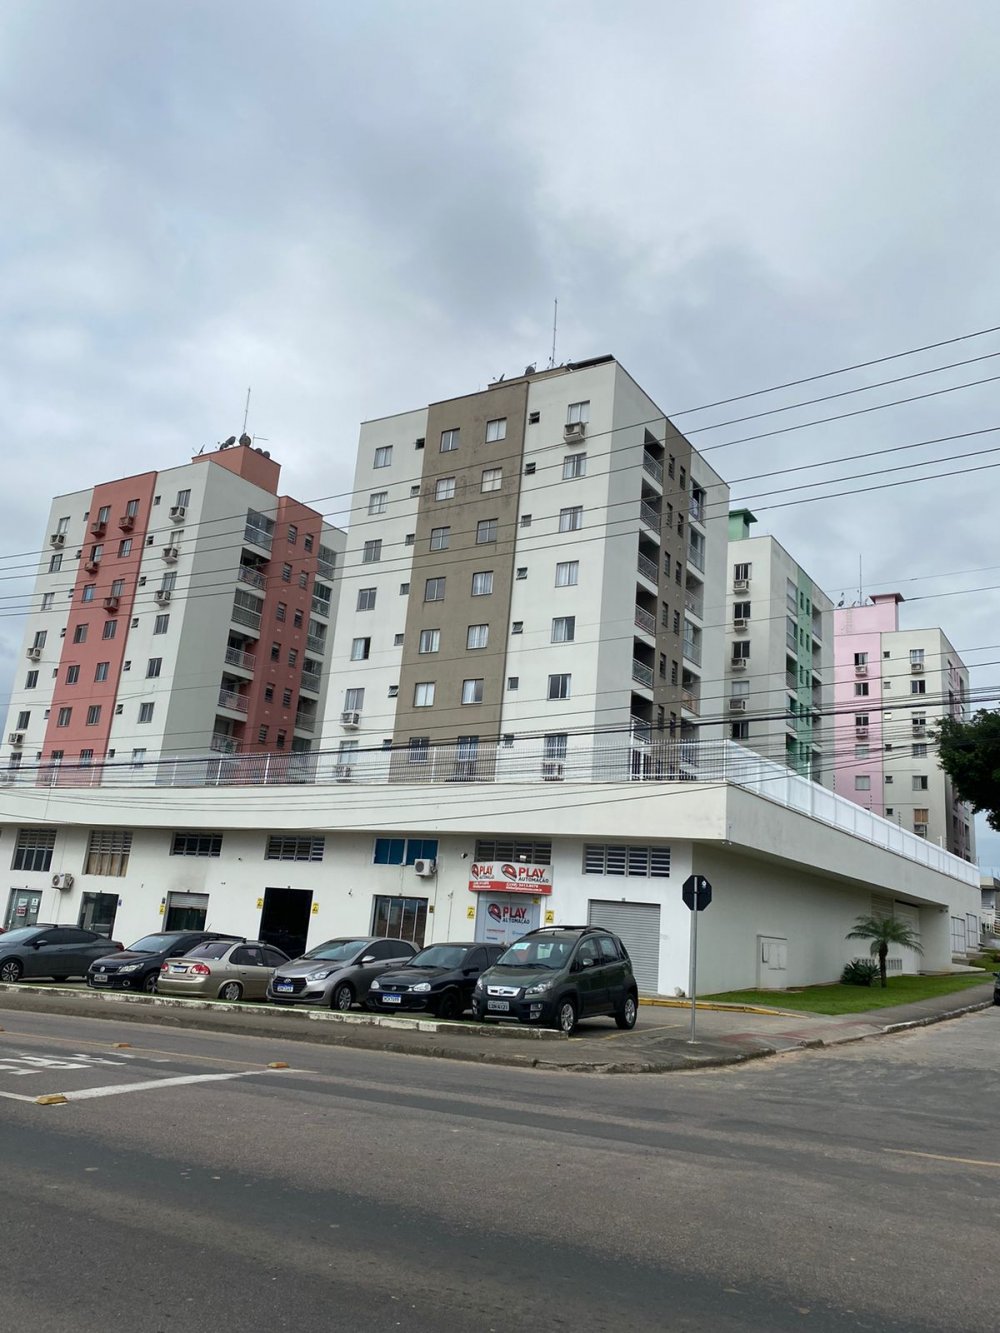 Apartamento - Venda - So Luiz - Cricima - SC